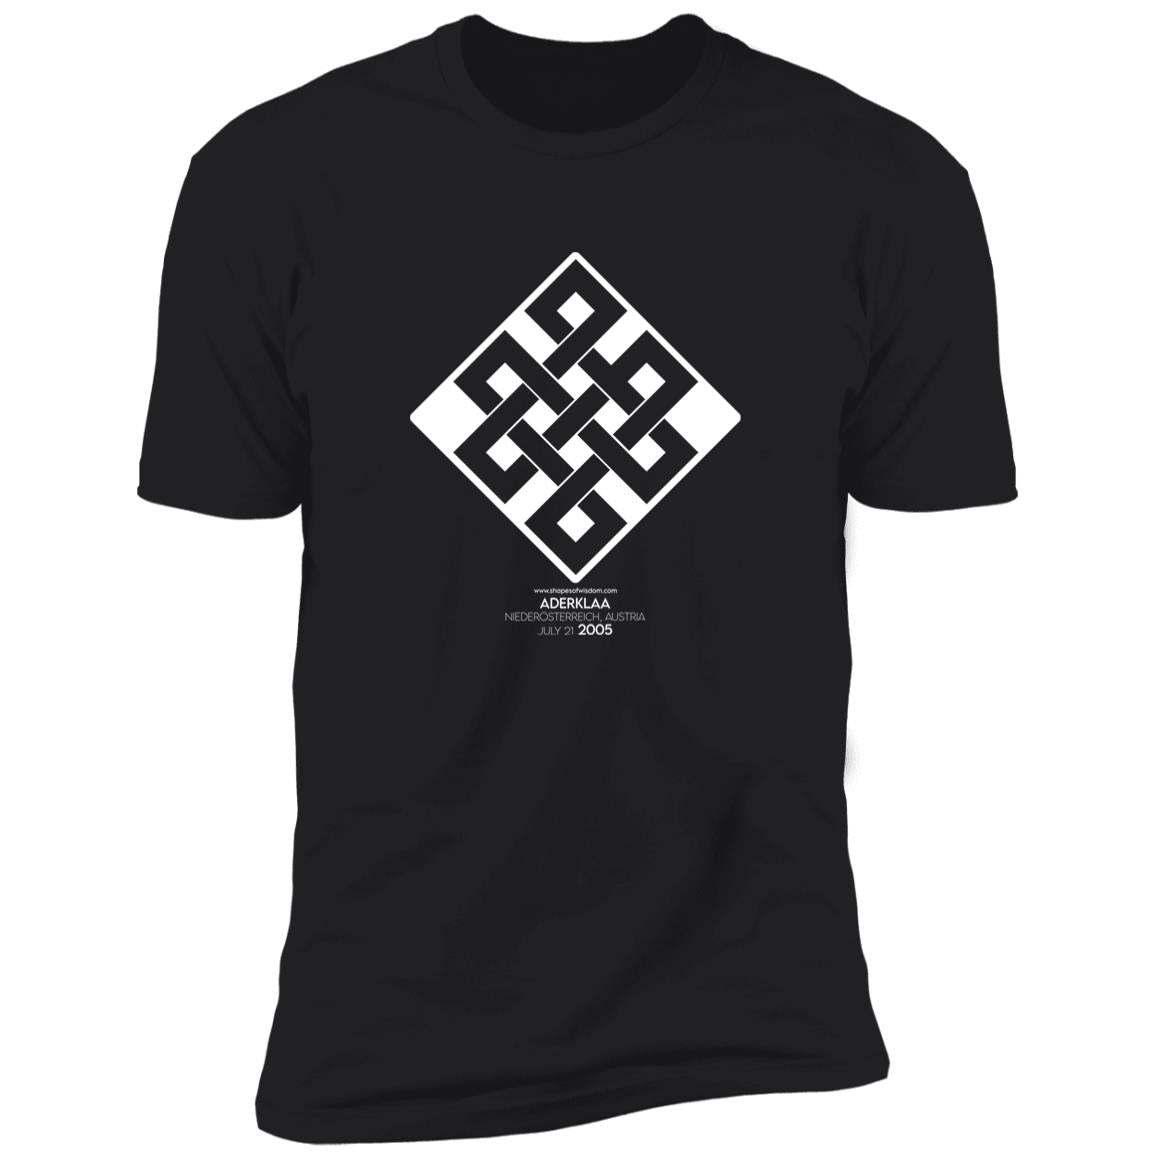 Crop Circle Premium T-Shirt - Aderklaa